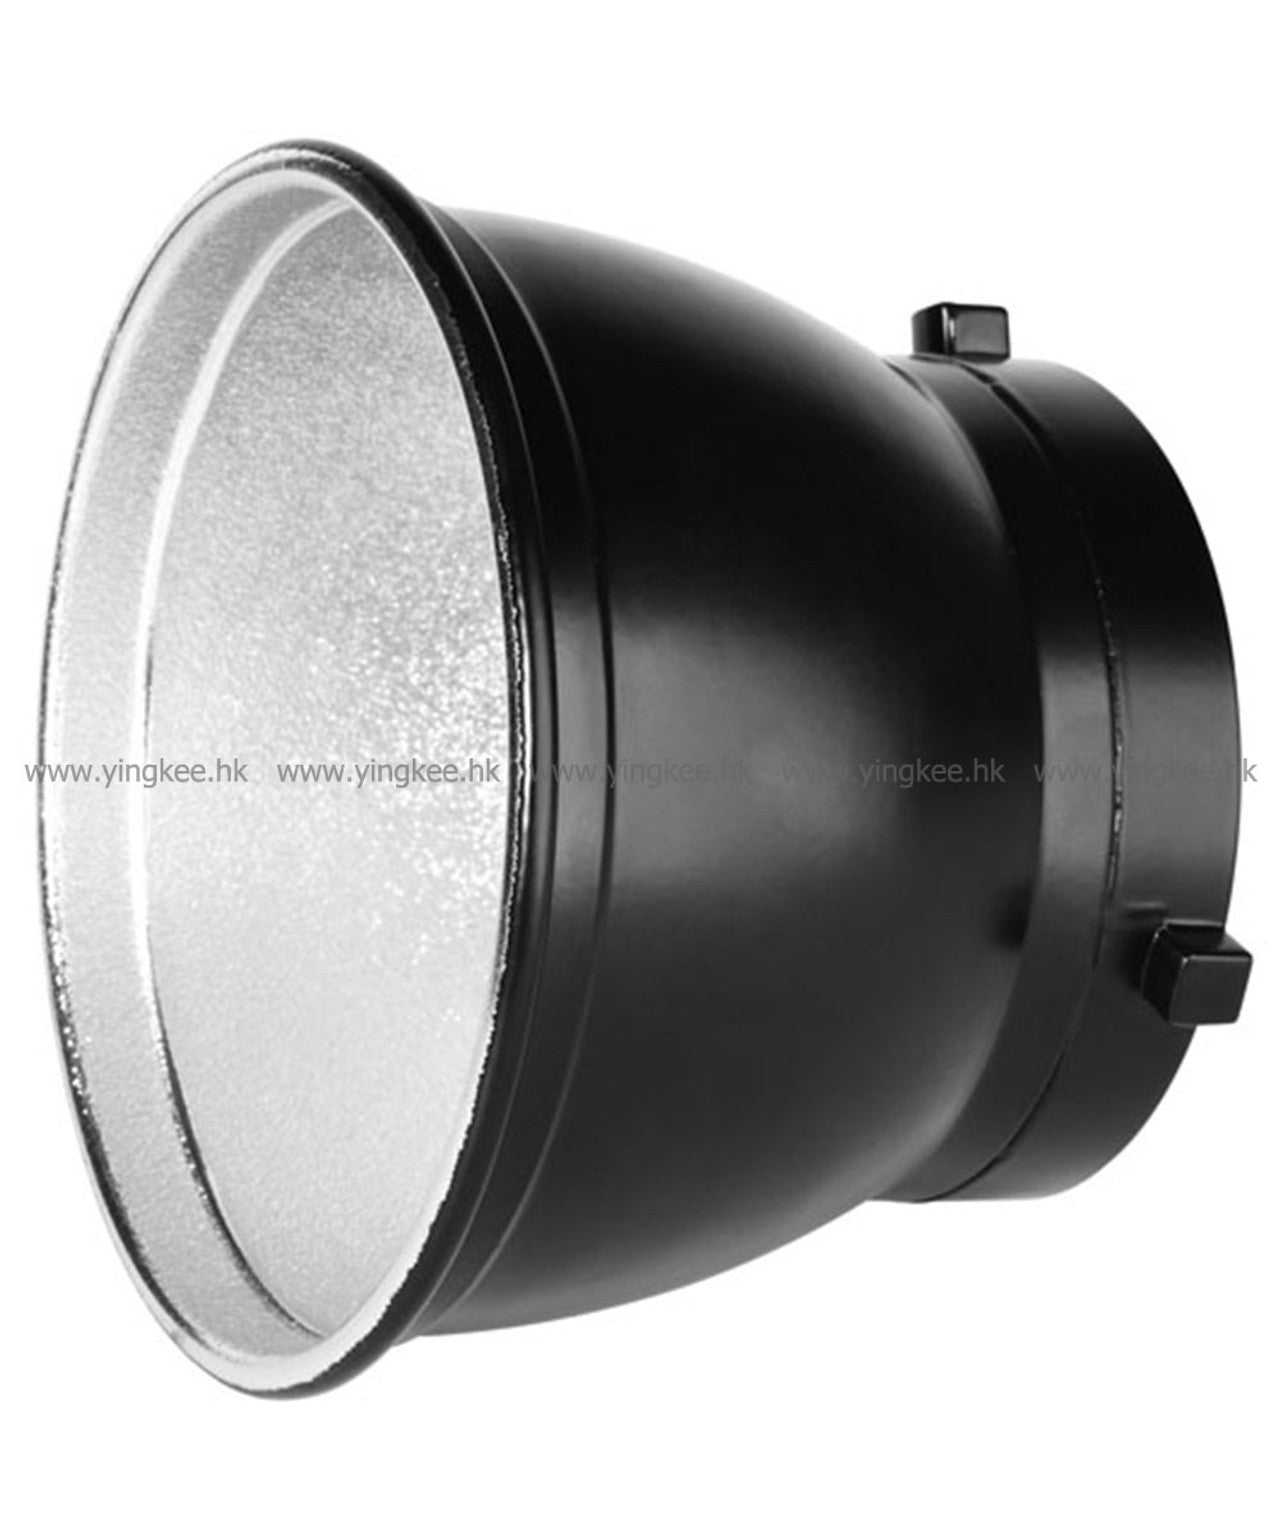 Jinbei 金貝 Bowl Reflector 35° Bowens Mount 標準反光燈罩